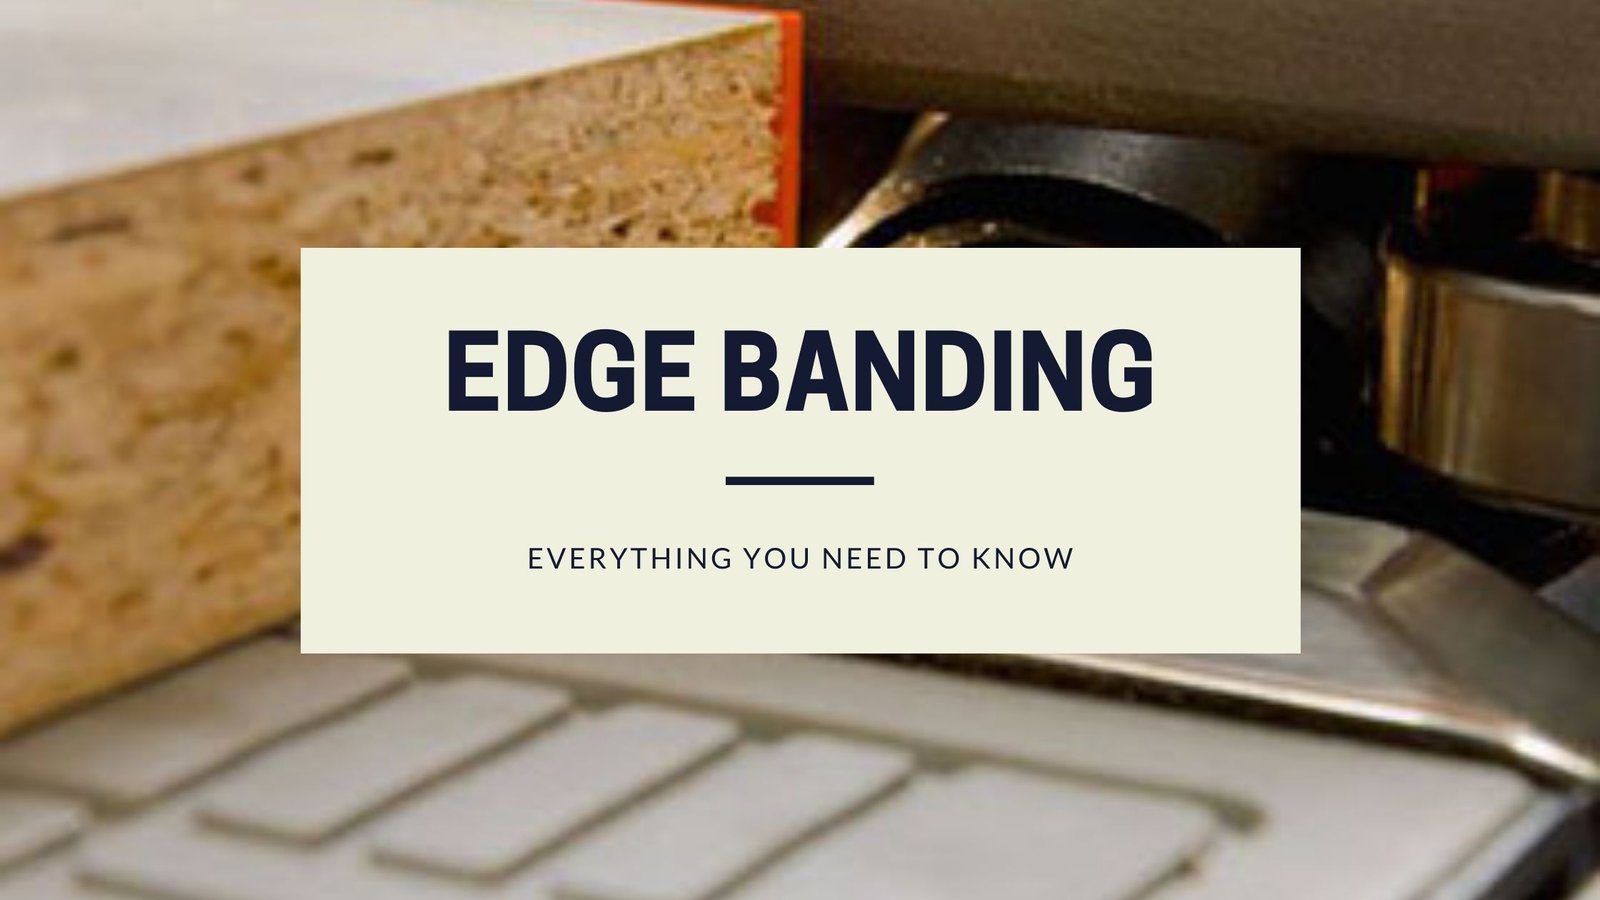 uPVC Edge Bands: Tape for Kitchen Furniture Edges